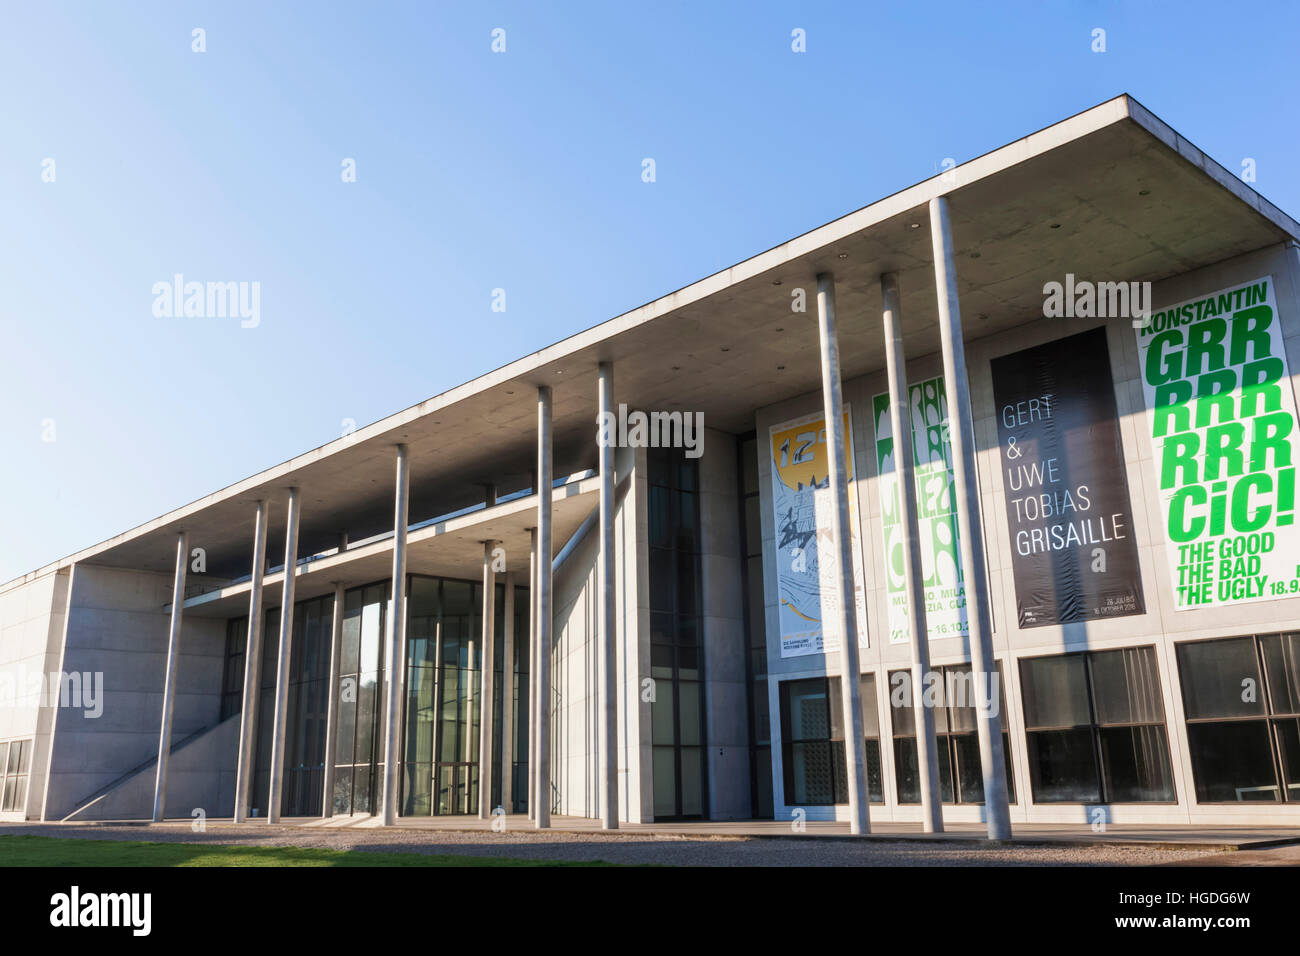 Alemania, Baviera, Munich, la pinacoteca del Museo de Arte Moderno (Pinakothek der Moderne) Foto de stock